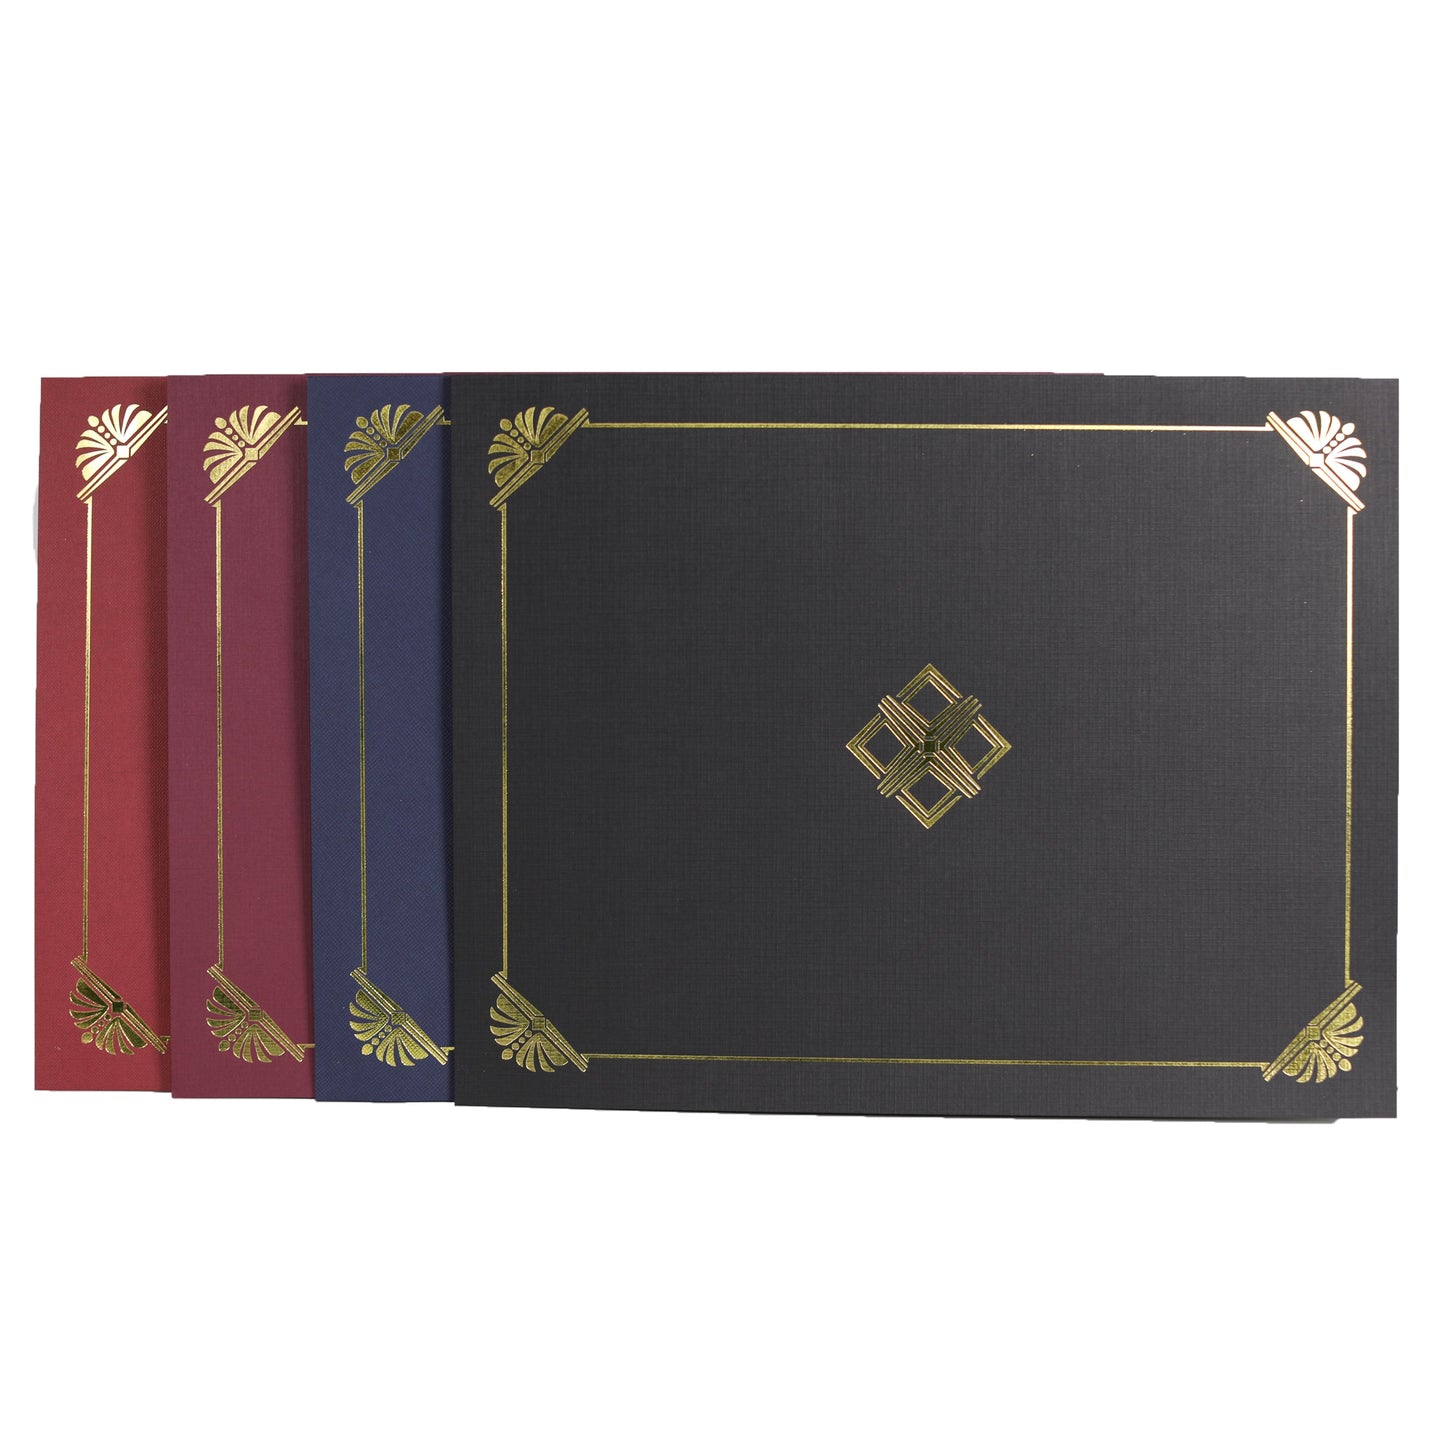 St. James® Certificate Holders/Document Covers/Diploma Holders, Black, Gold Foil, Linen Finish, Pack of 5